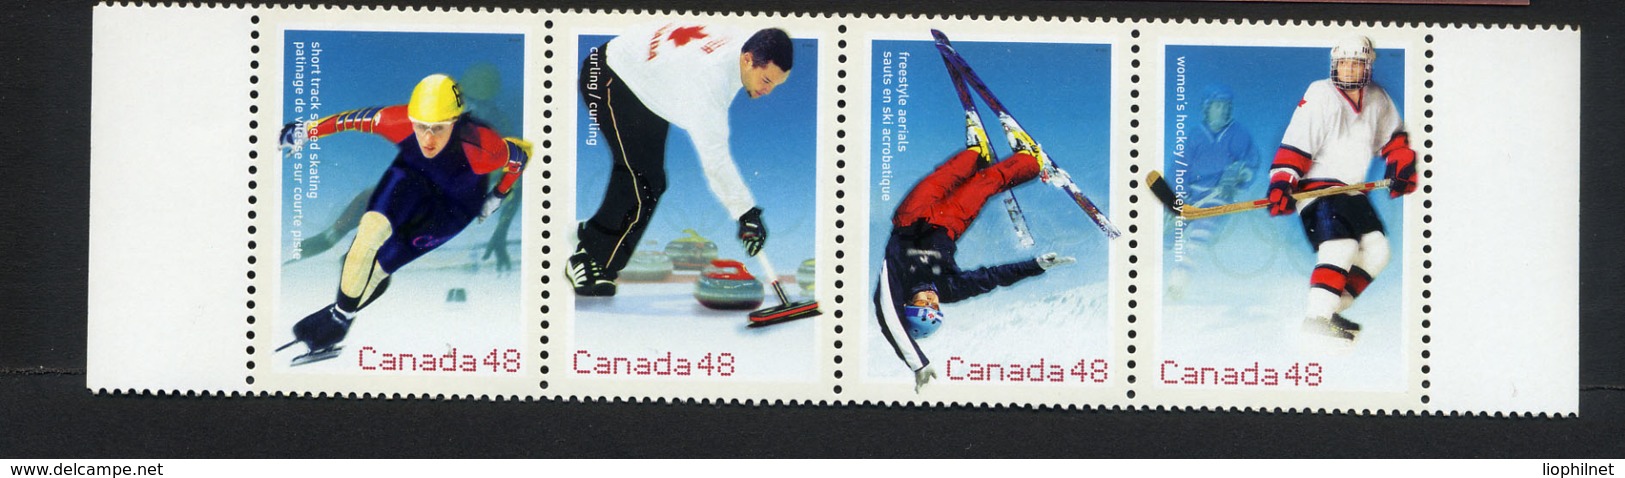 CANADA 2002, Patinage De Vitesse, Curling, Hockey, Ski Acrobatique, 4 Valeurs, Neufs / Mint. R1528 - Winter 2002: Salt Lake City